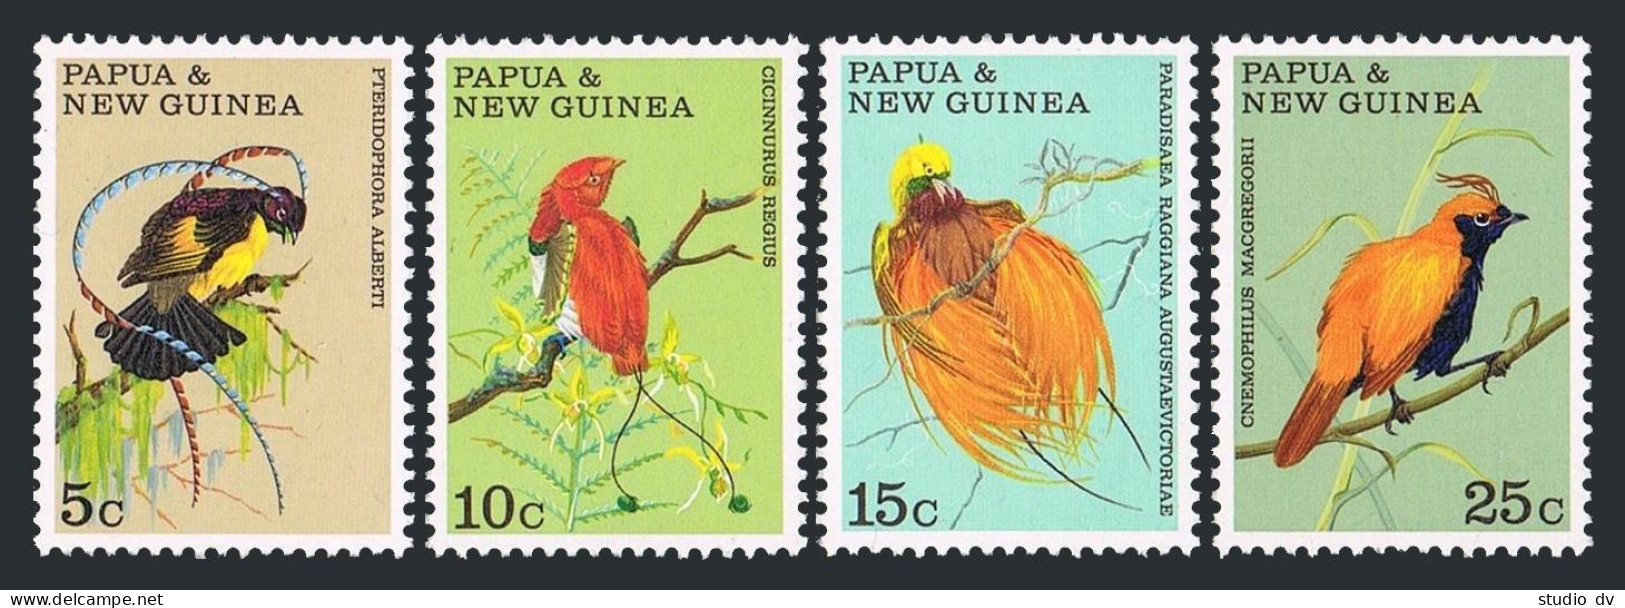 Papua New Guinea 301-304, MNH. Michel 175-178. Birds Of Paradise, 1970. - Guinea (1958-...)